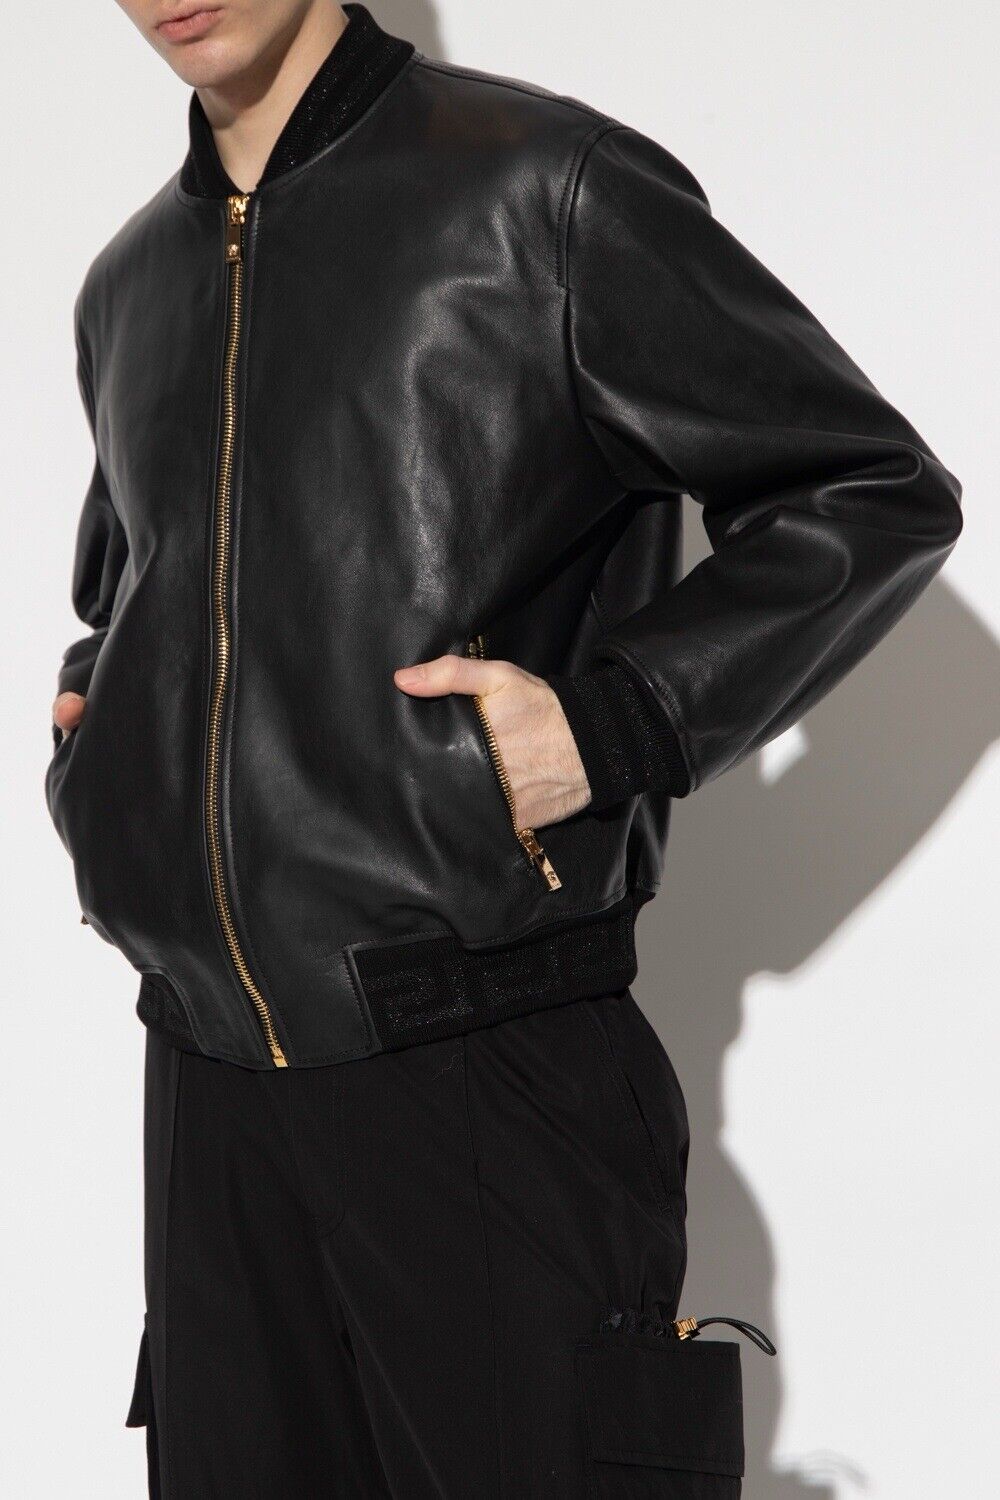 Versace Men's Calf Leather Heavy Jacket Black 44 US (54 Eu) IT NWT $3625 1007634